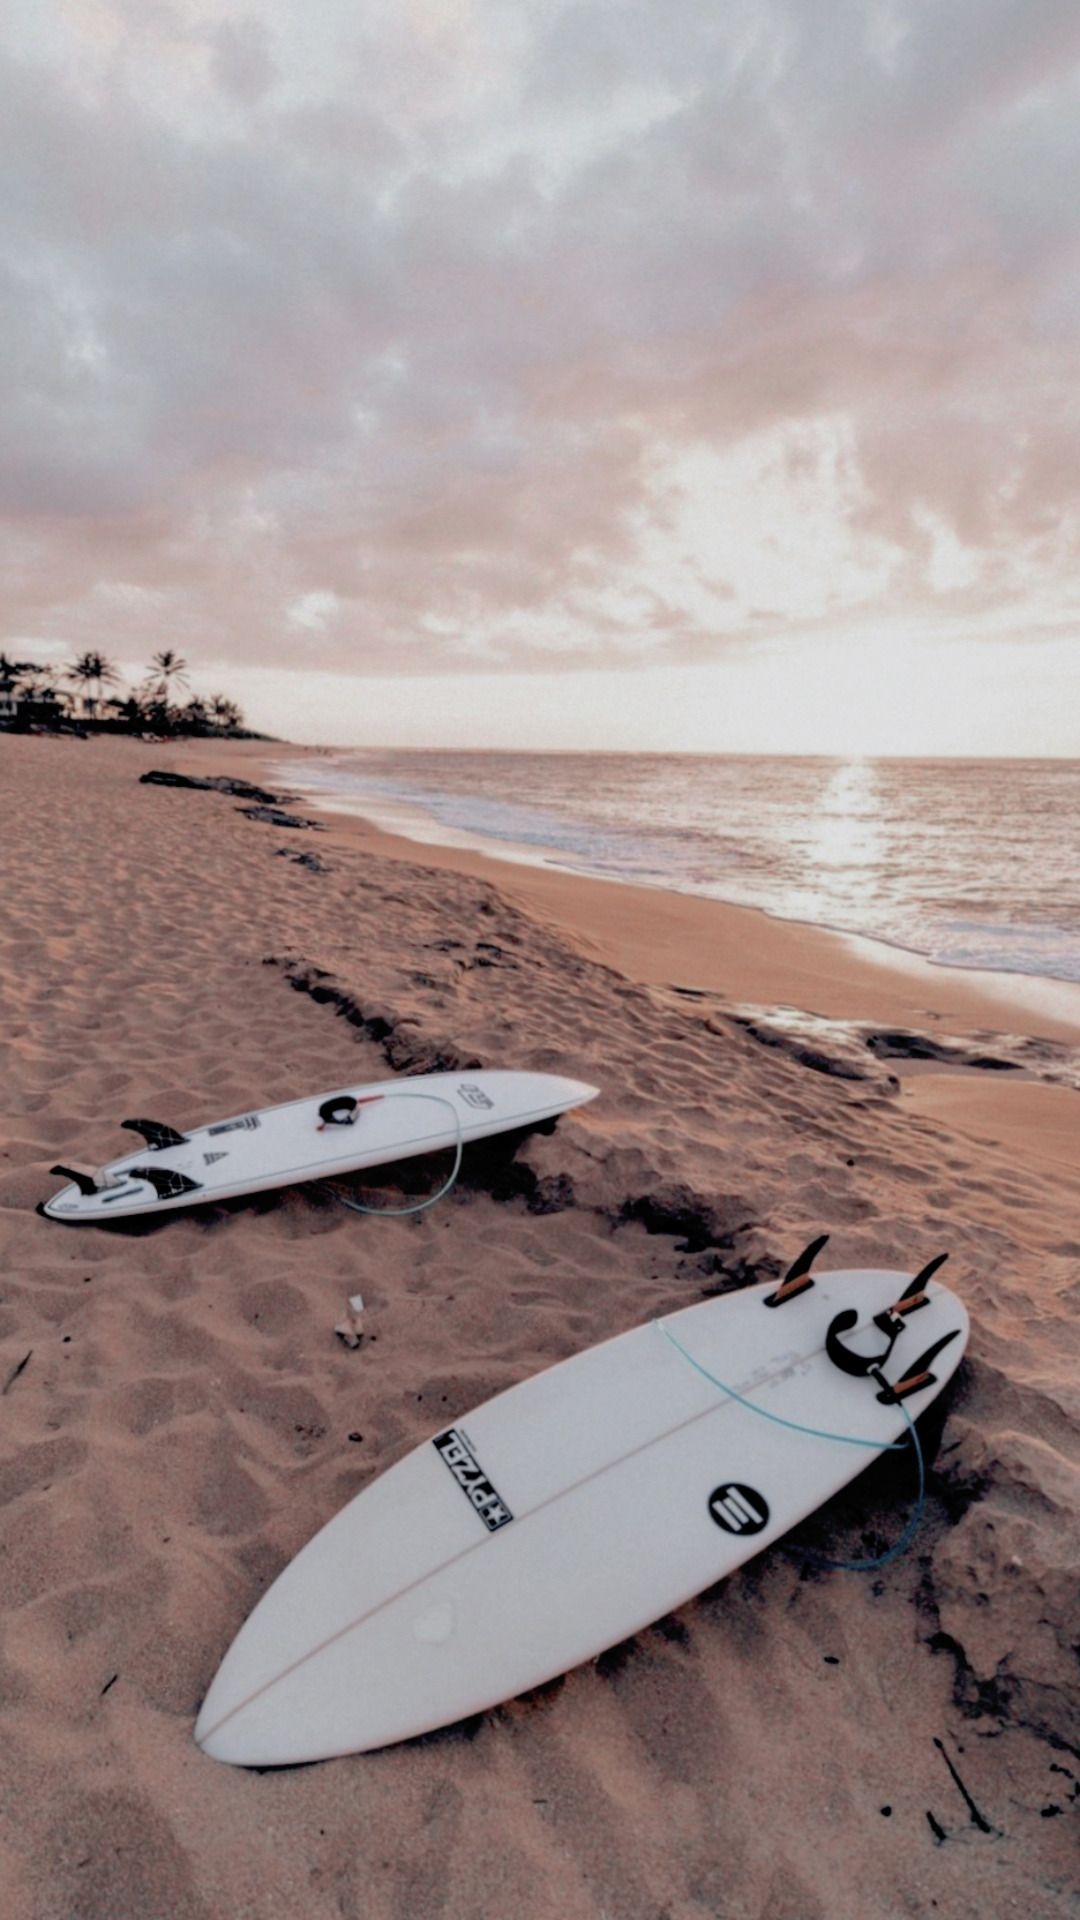 Two surfboards left on the beach - Beach